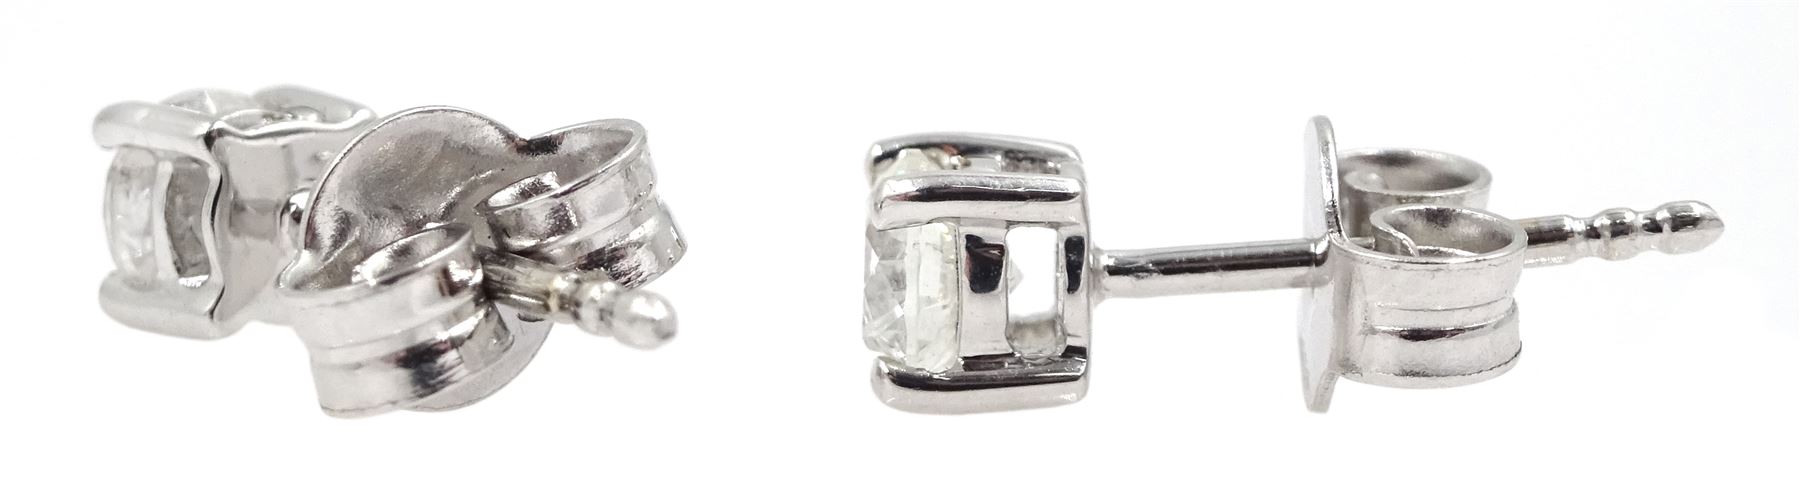 Pair of 18ct white gold diamond stud earrings - Image 2 of 2